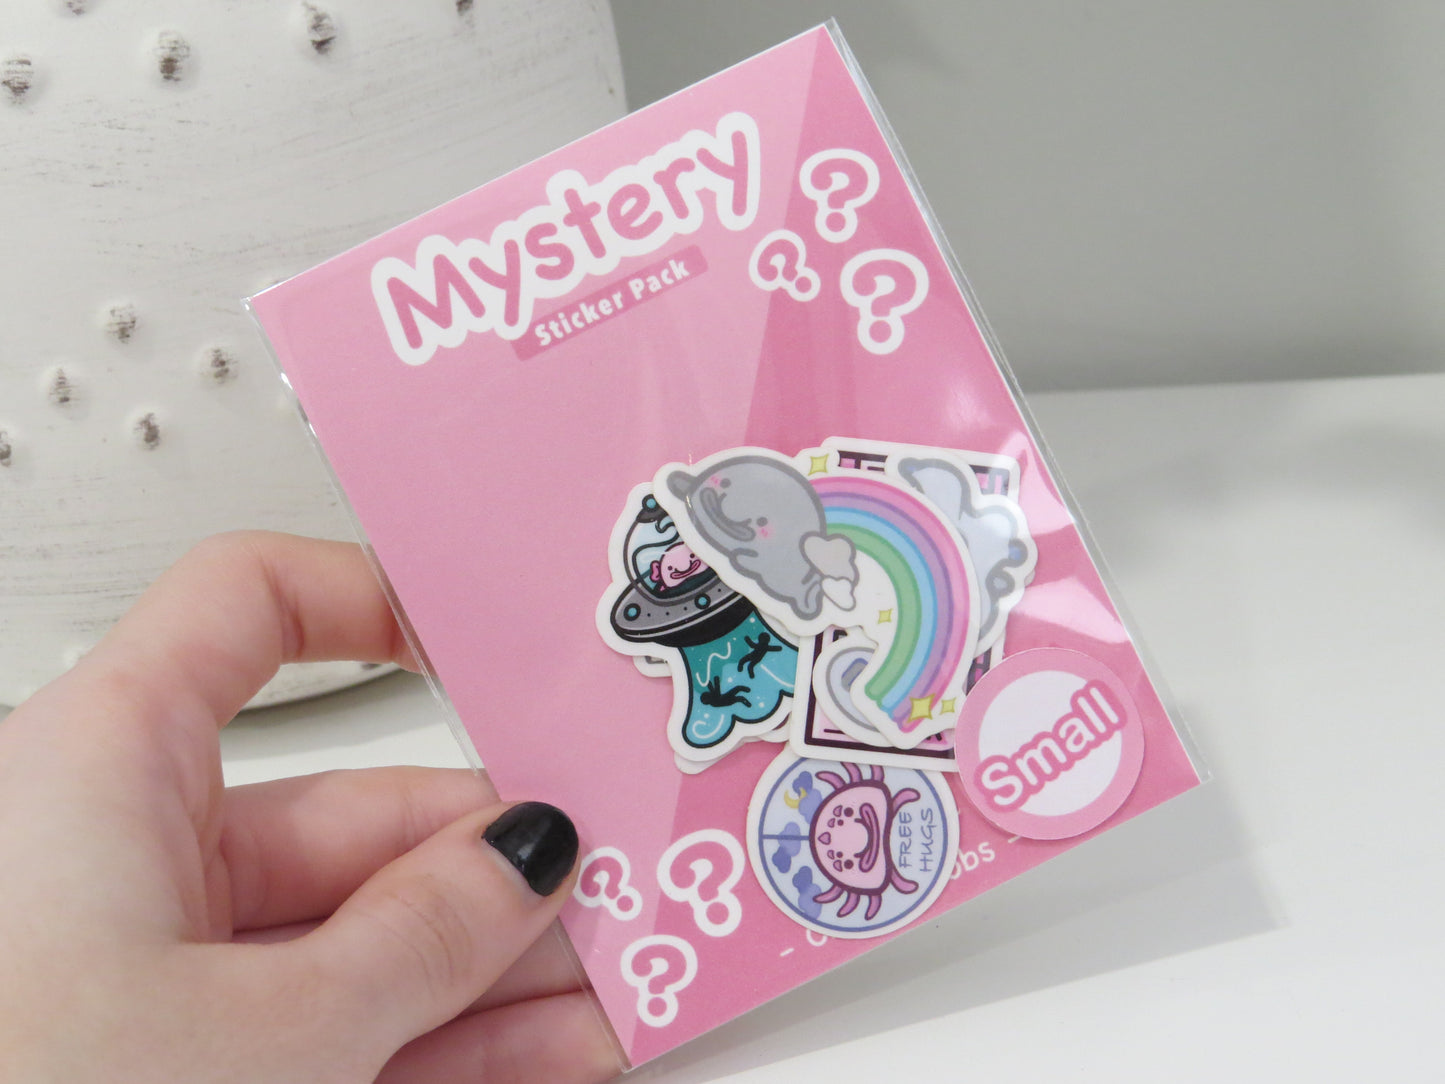 Mini Sticker Mystery Pack